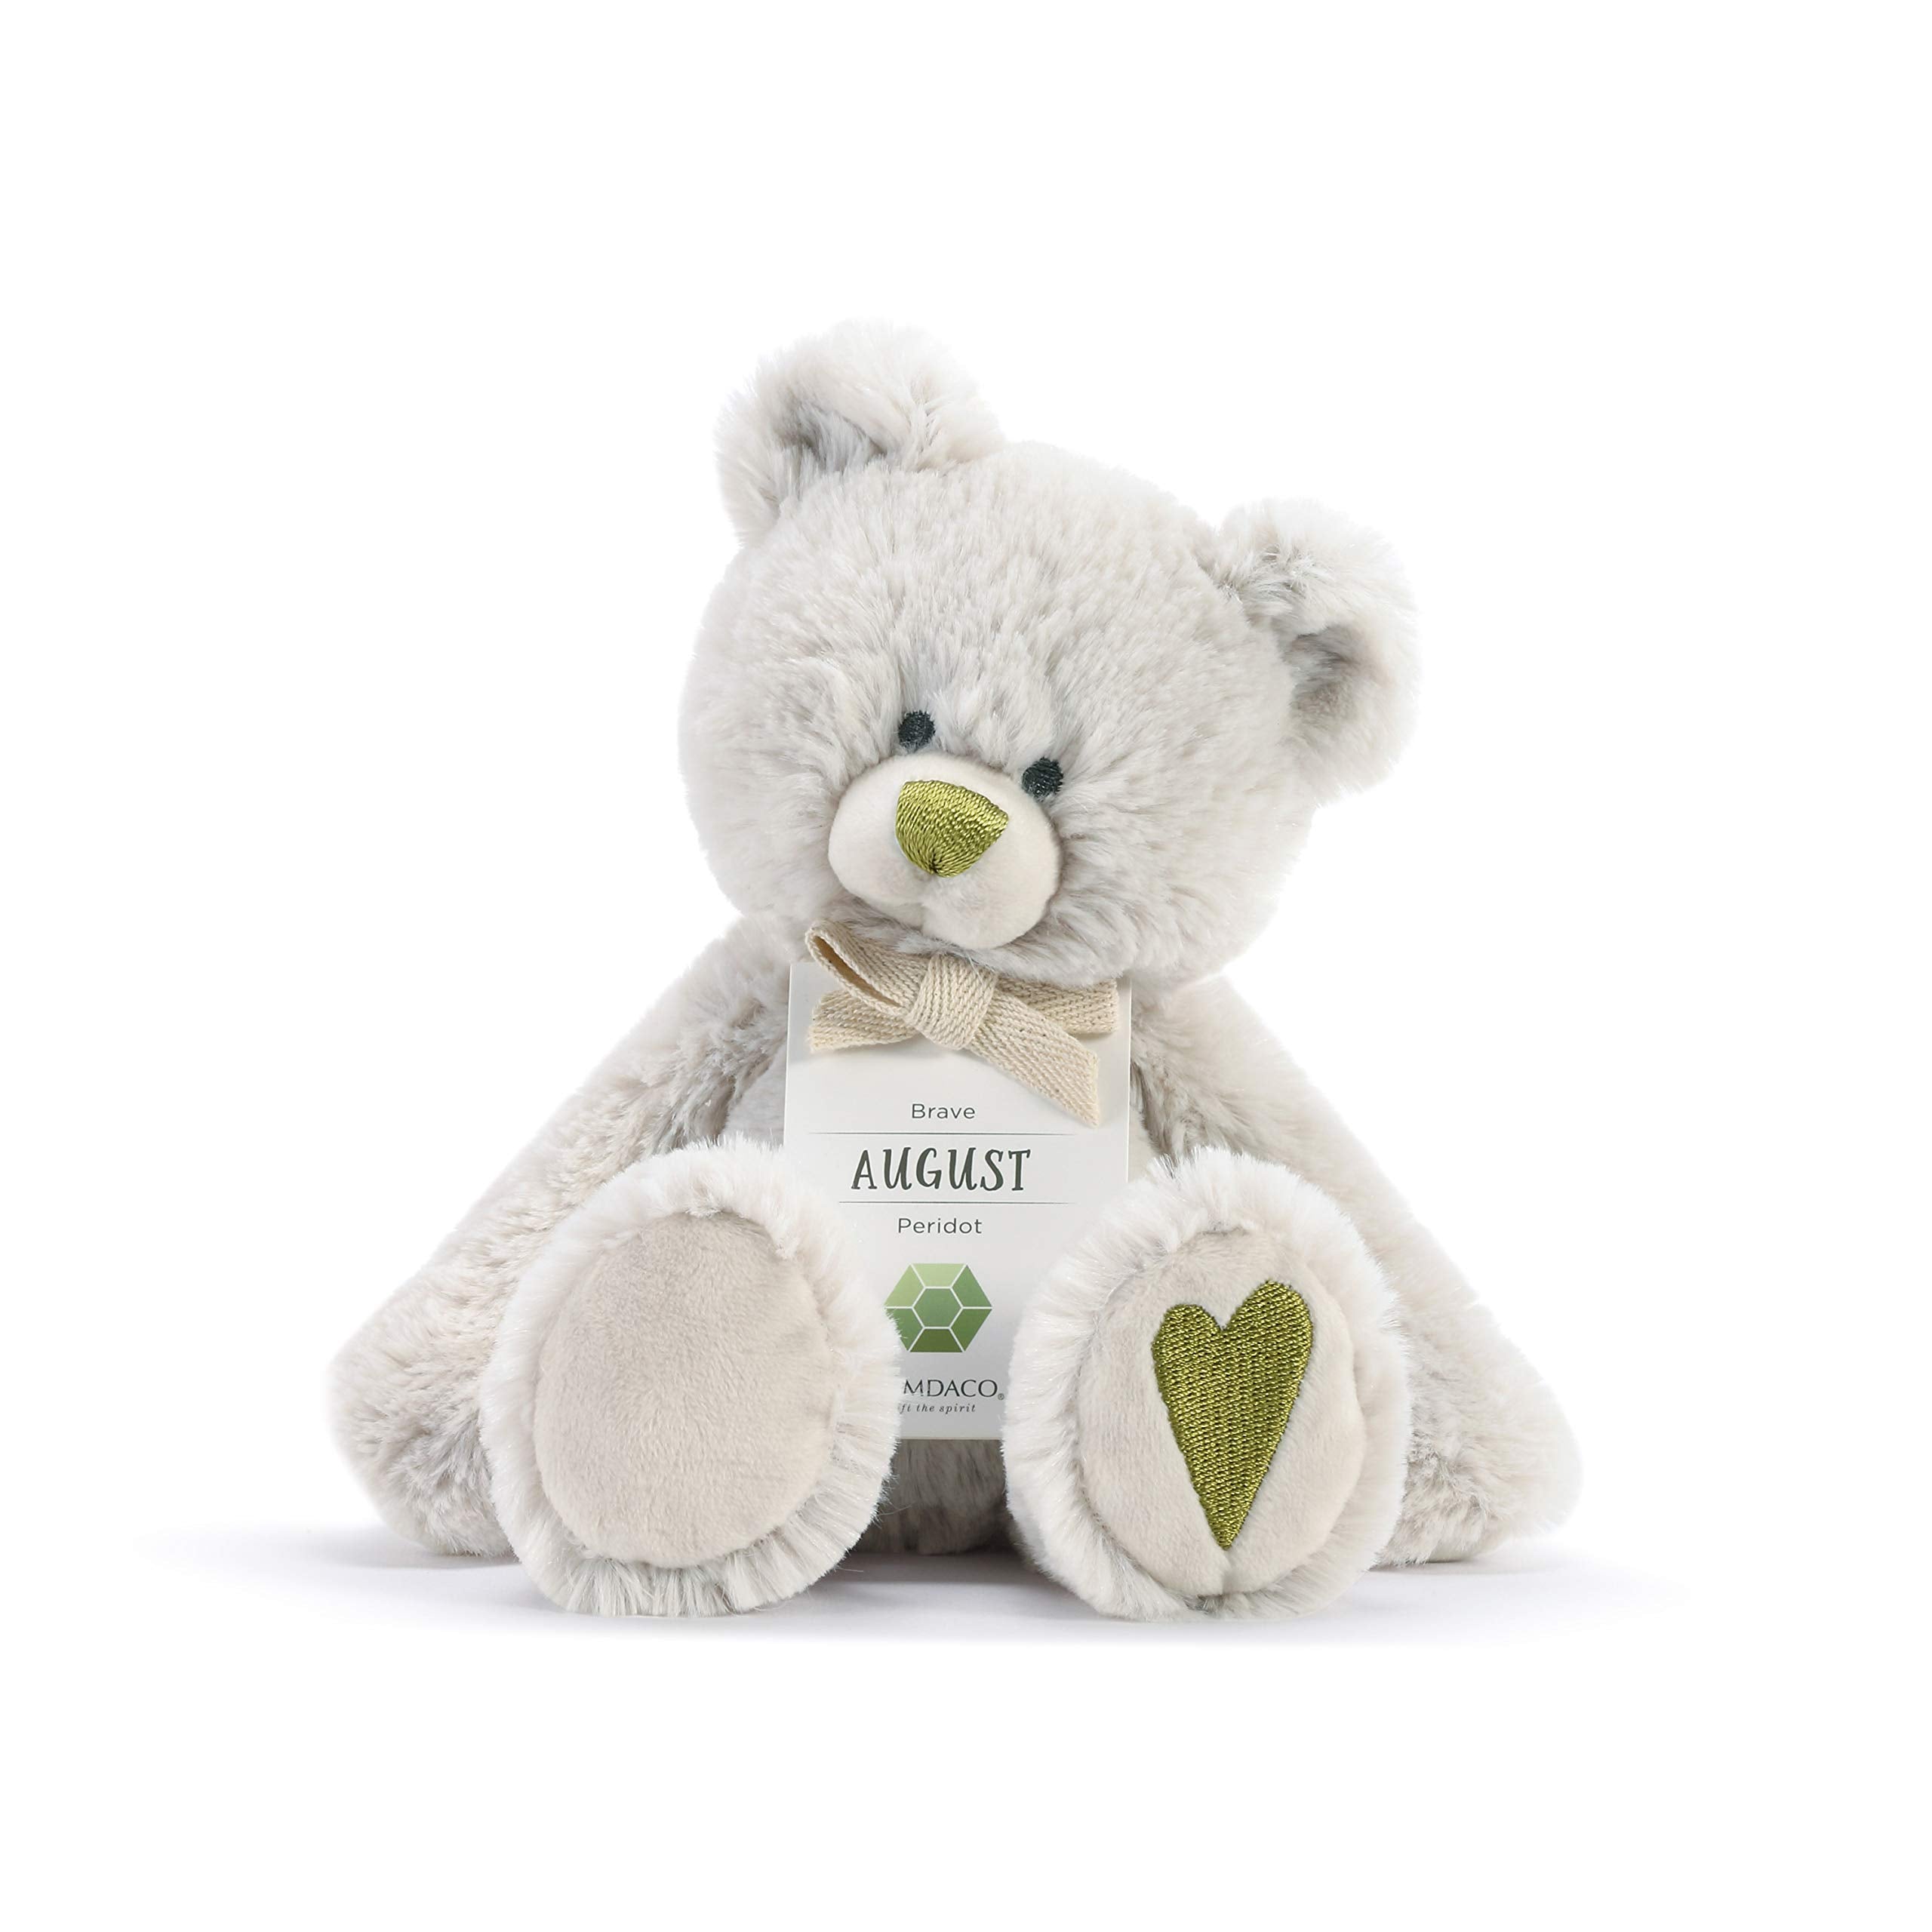 DEMDACO Brave Green Peridot Color August Birthstone 8.5 inch Children's Plush Stuffed Animal Toy